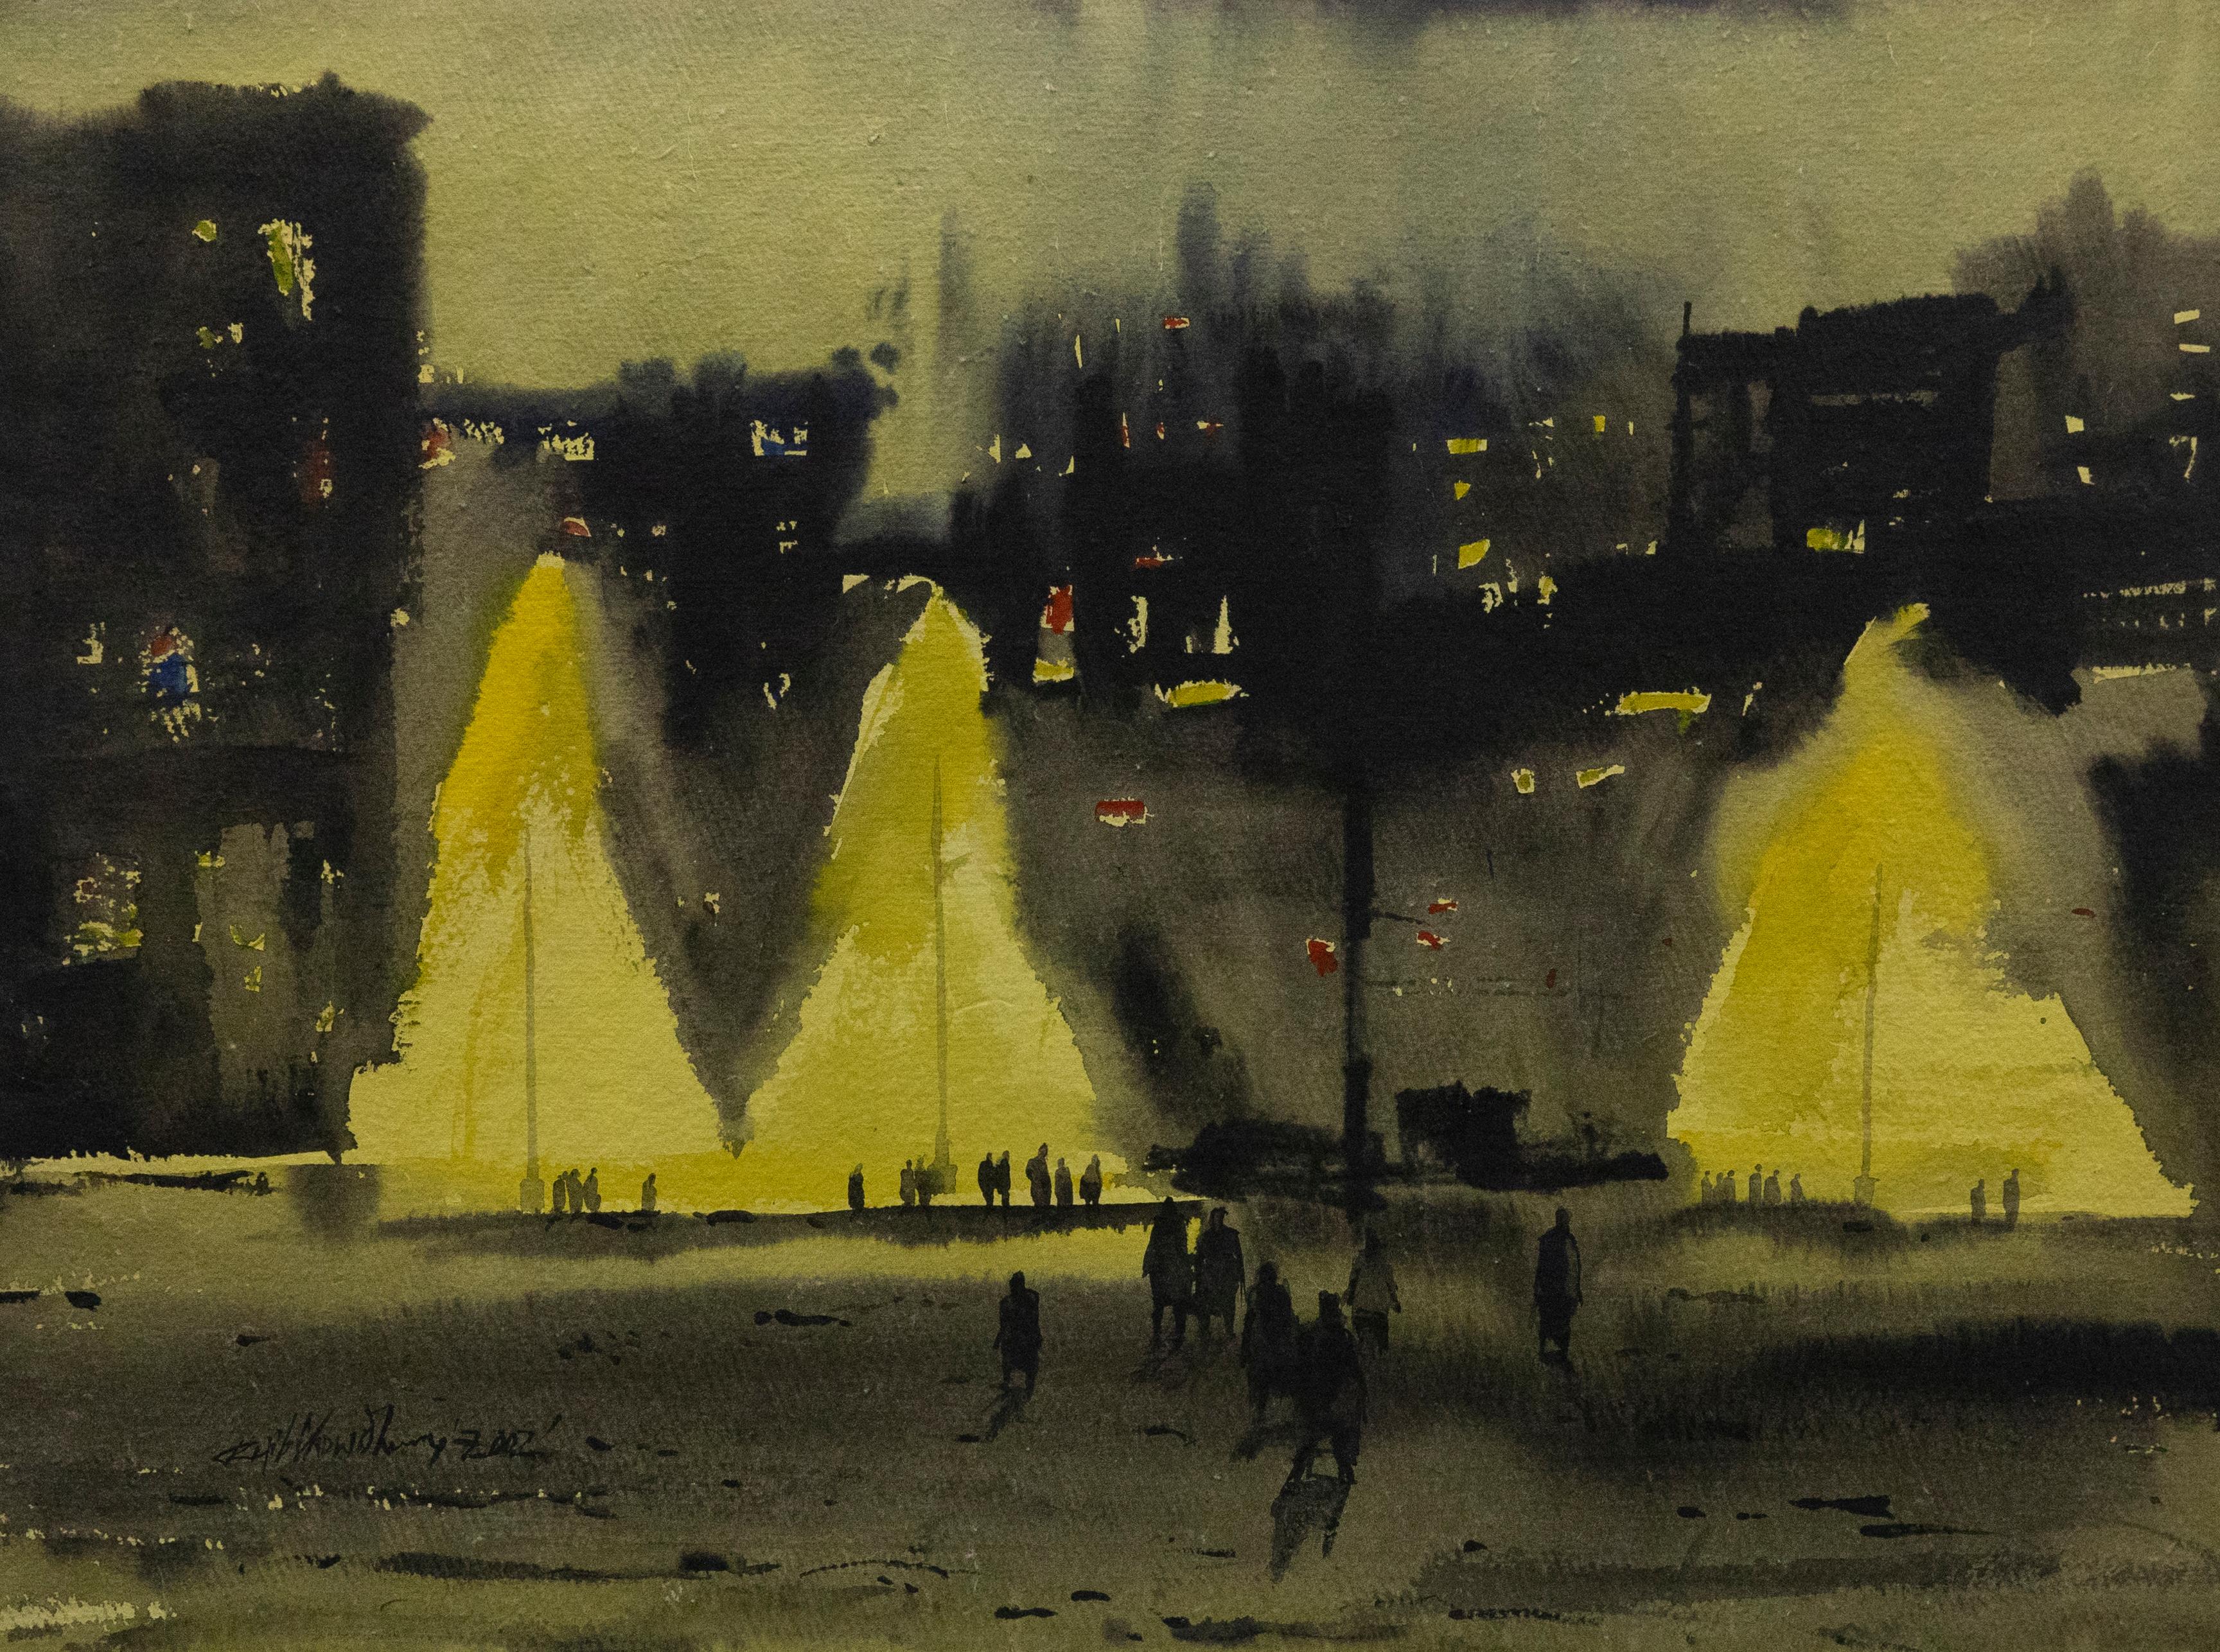 Unknown Landscape Art - 2002 Watercolour - Acid Lights, A City at Twilight